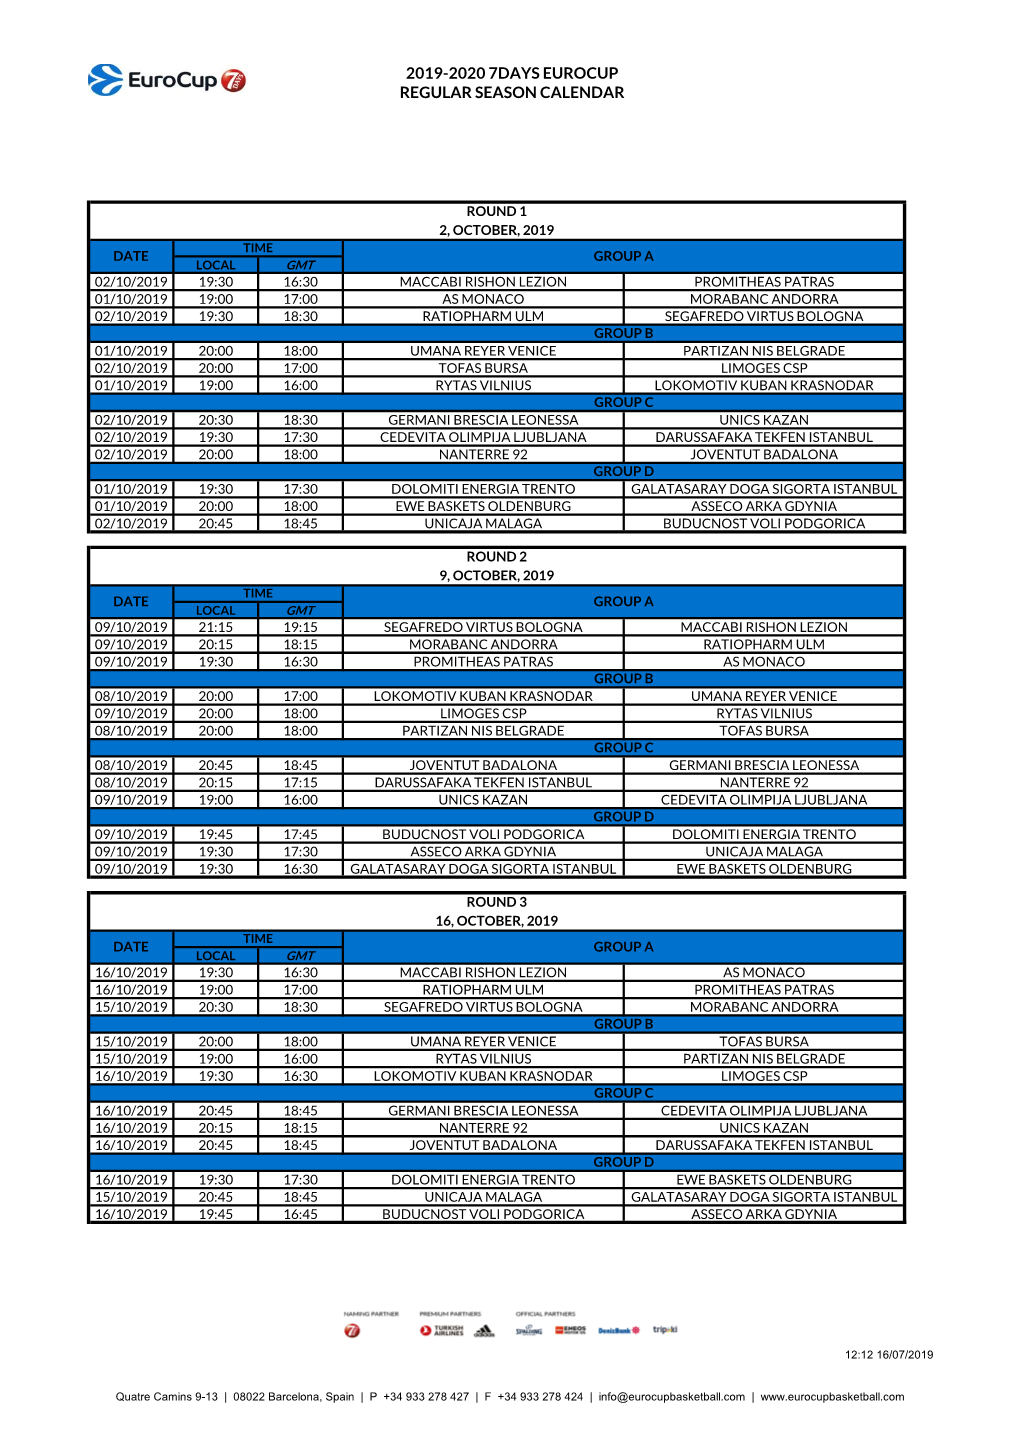 2019-2020 7Days Eurocup Regular Season Calendar